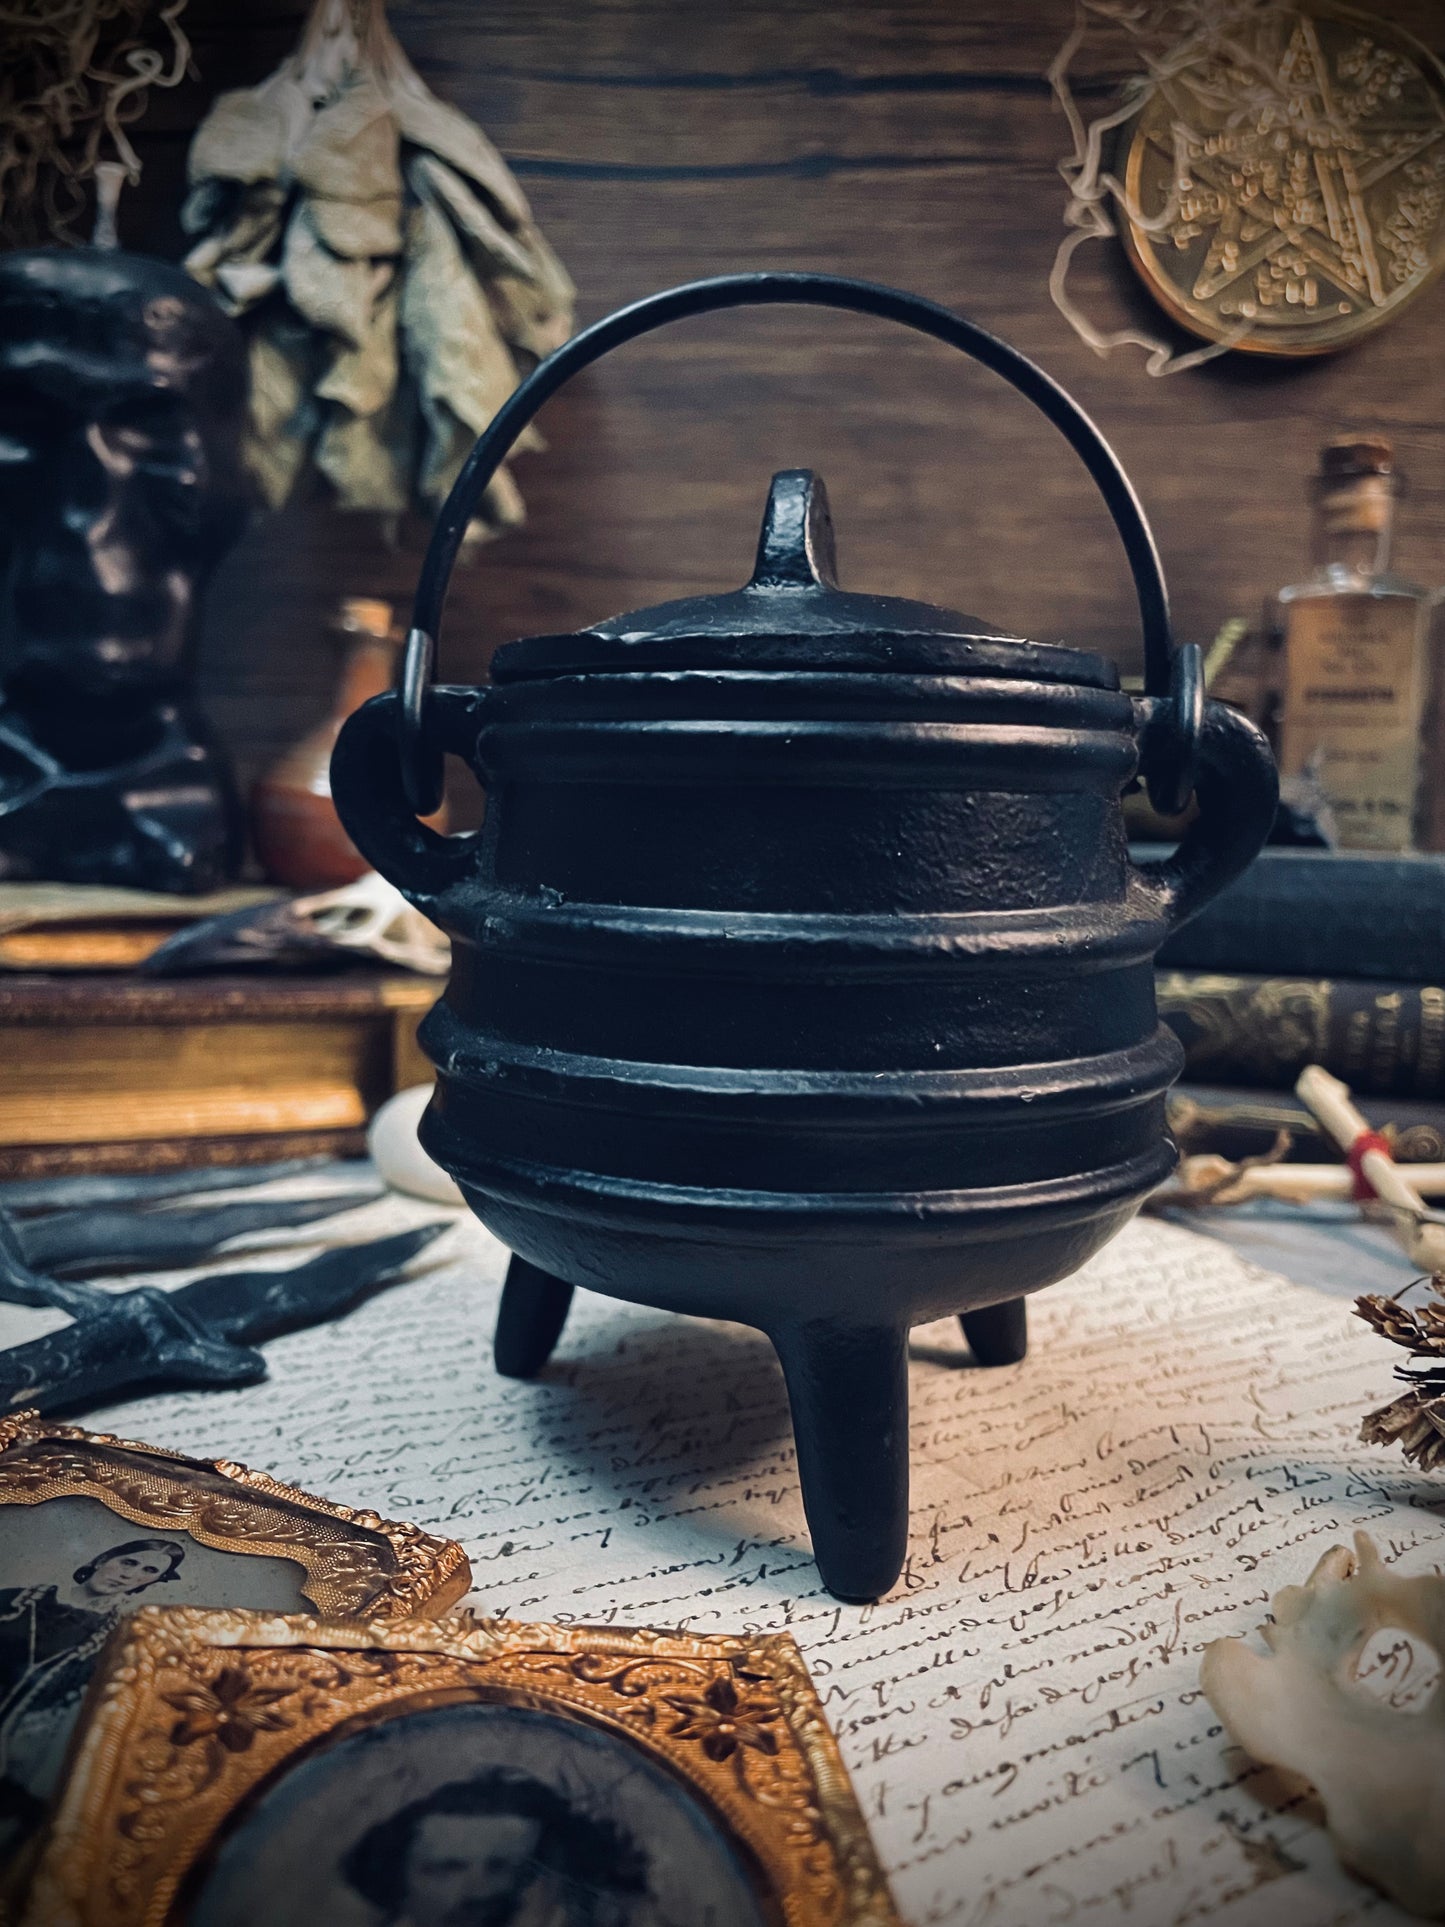 Medium Ribbed Iron Cauldron